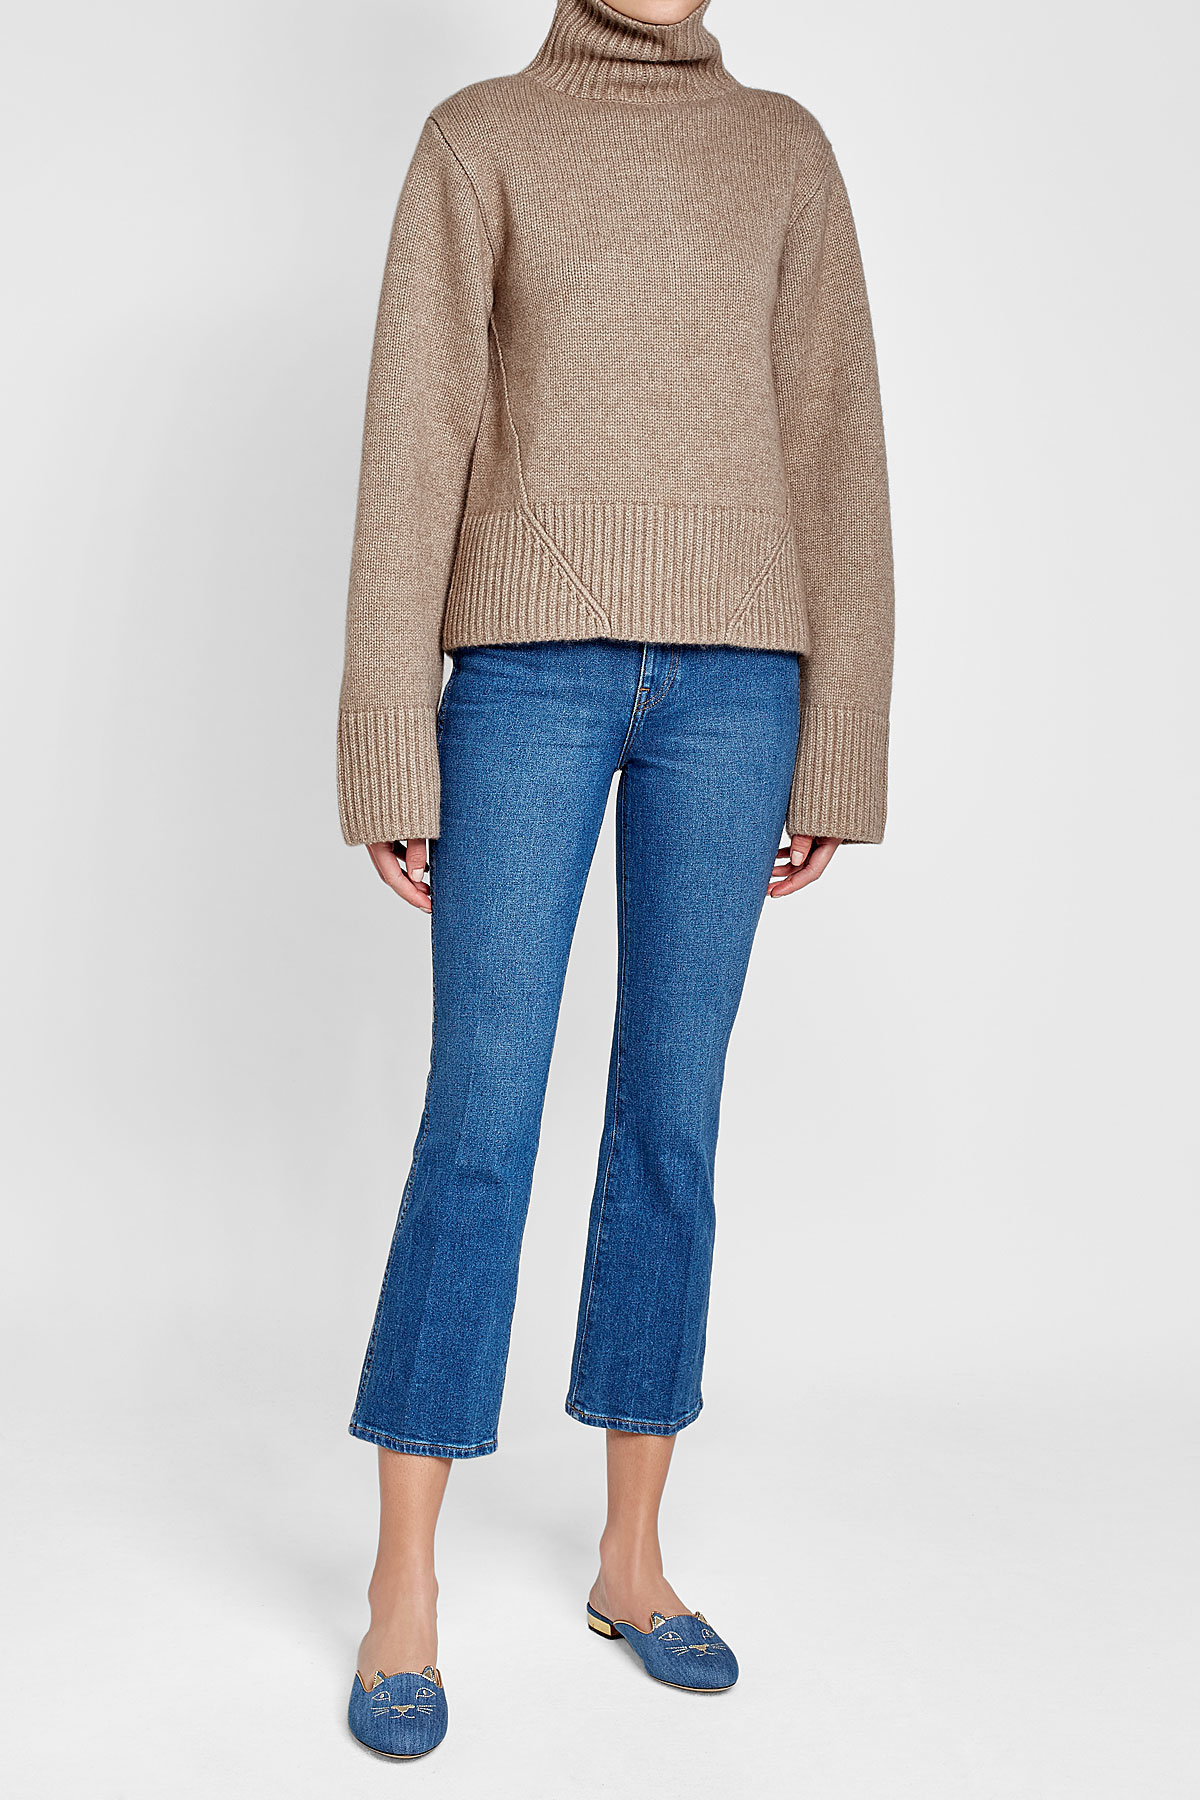 khaite wallis cashmere turtleneck with Khaite benny cropped flared jeans spring 2018 outfit ideas